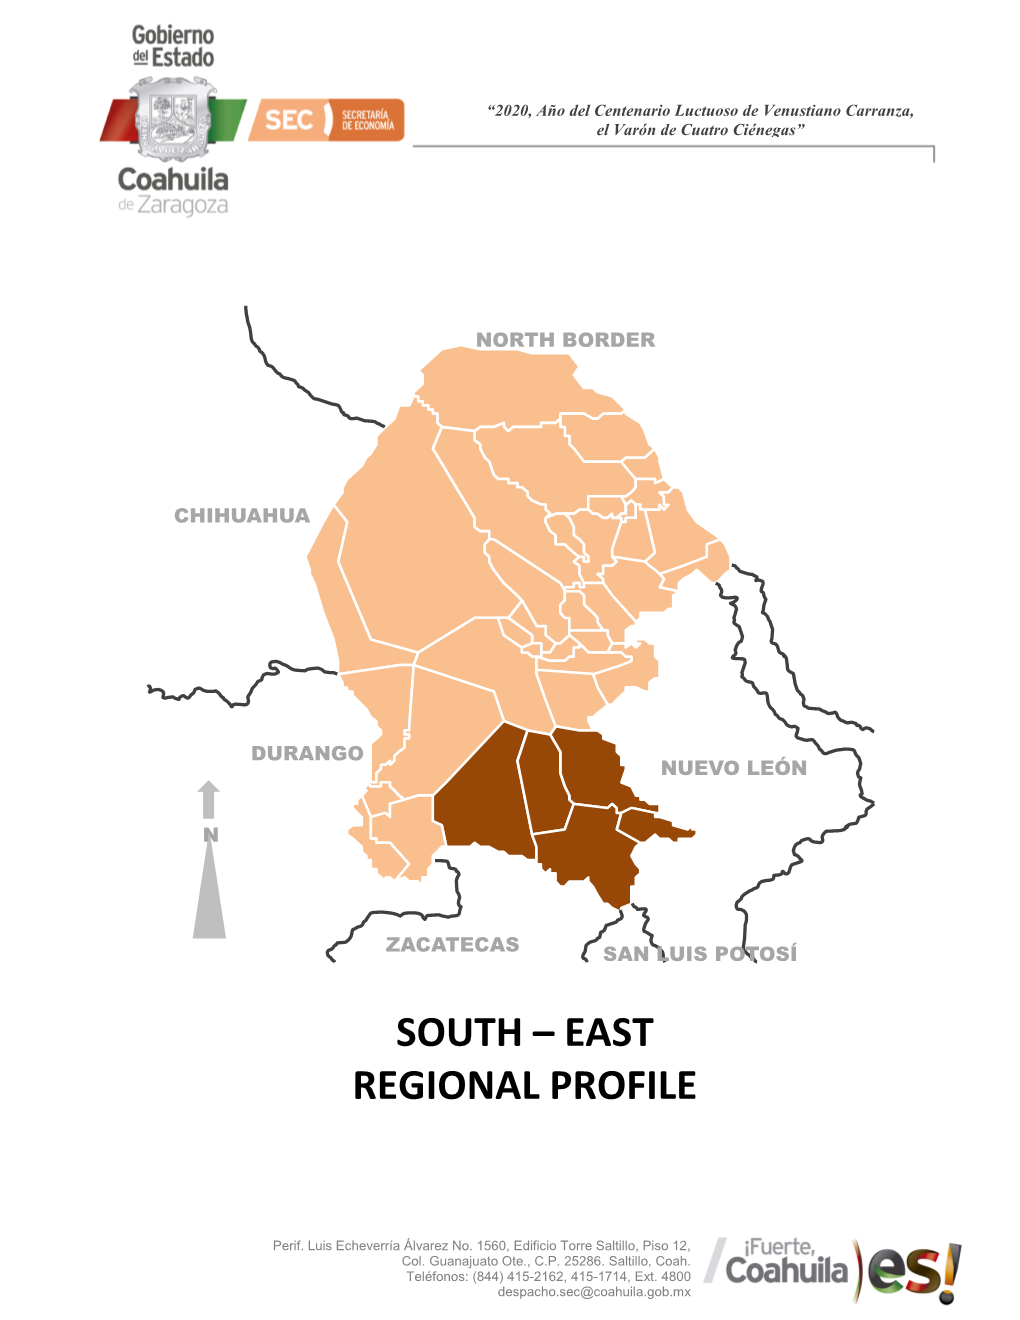 South – East Regional Profile